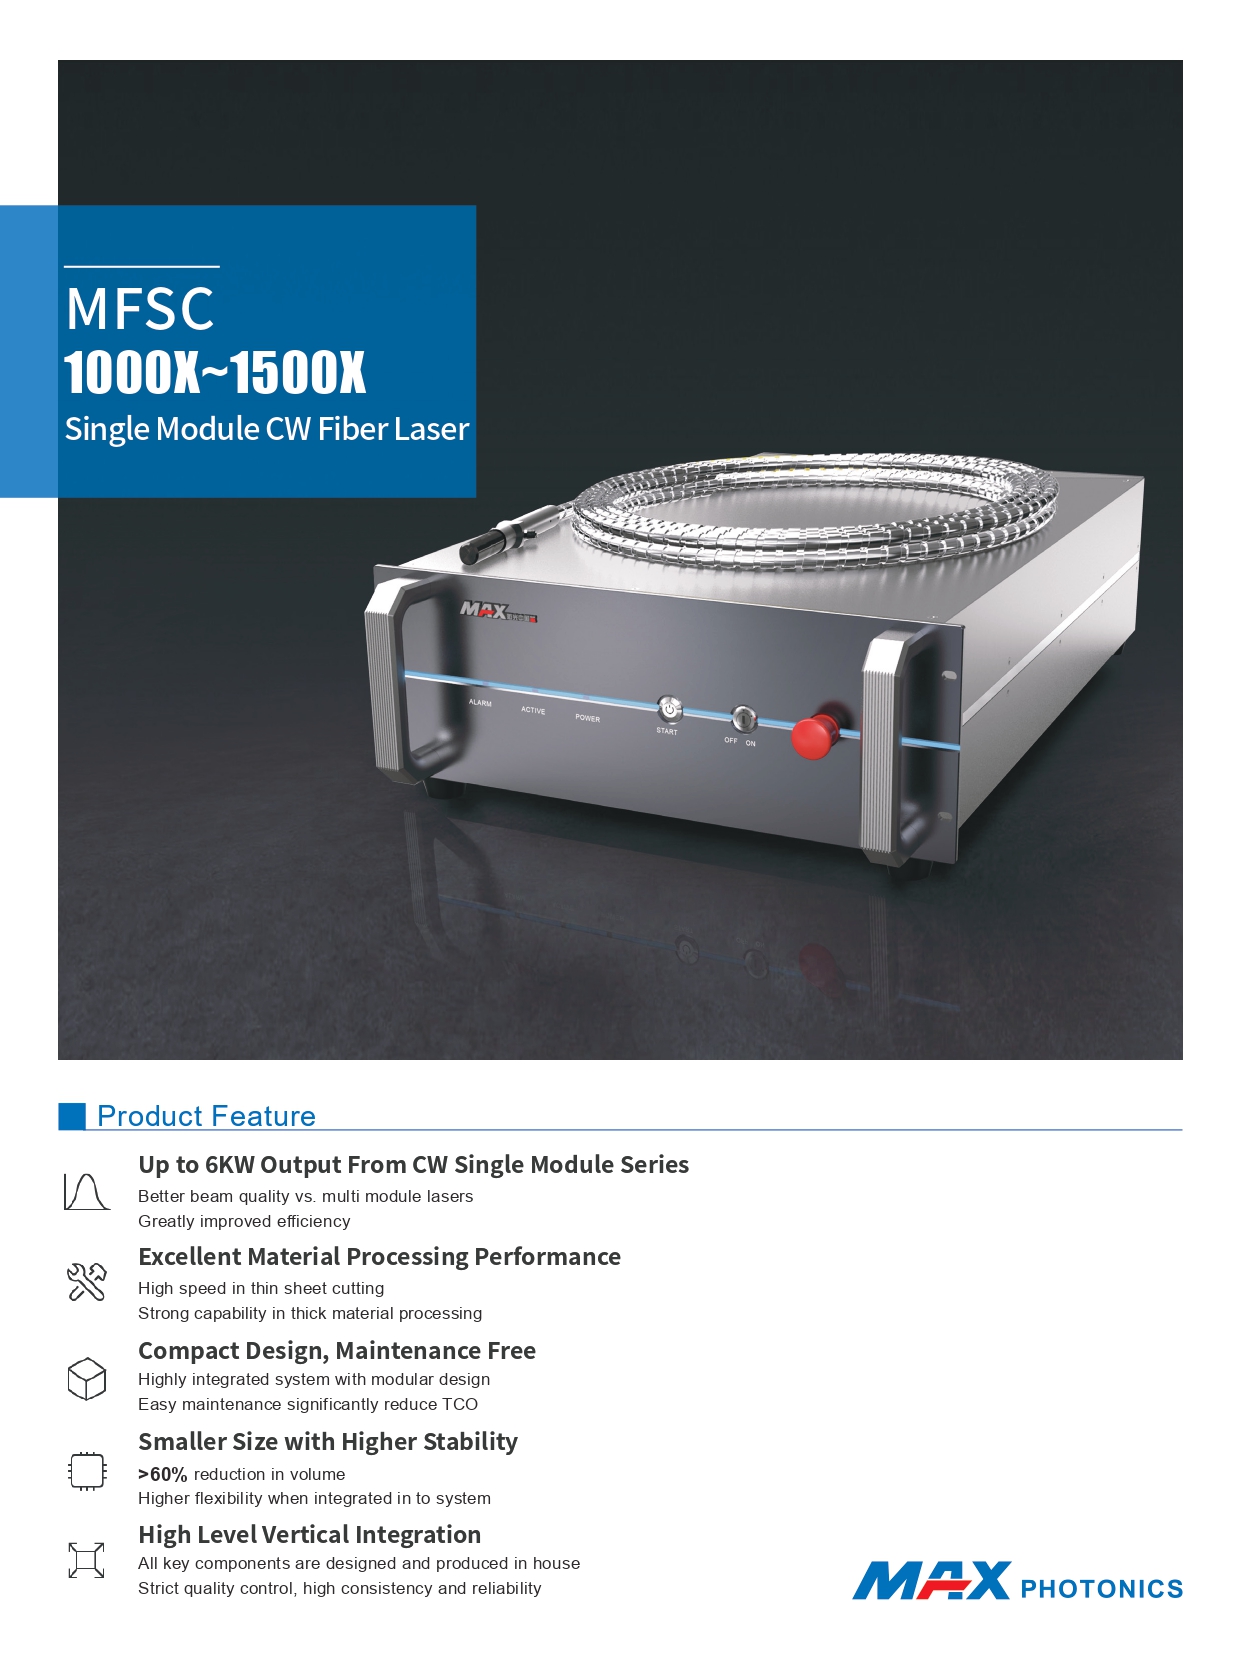 MFSC Single Module CW Fiber Laser Source